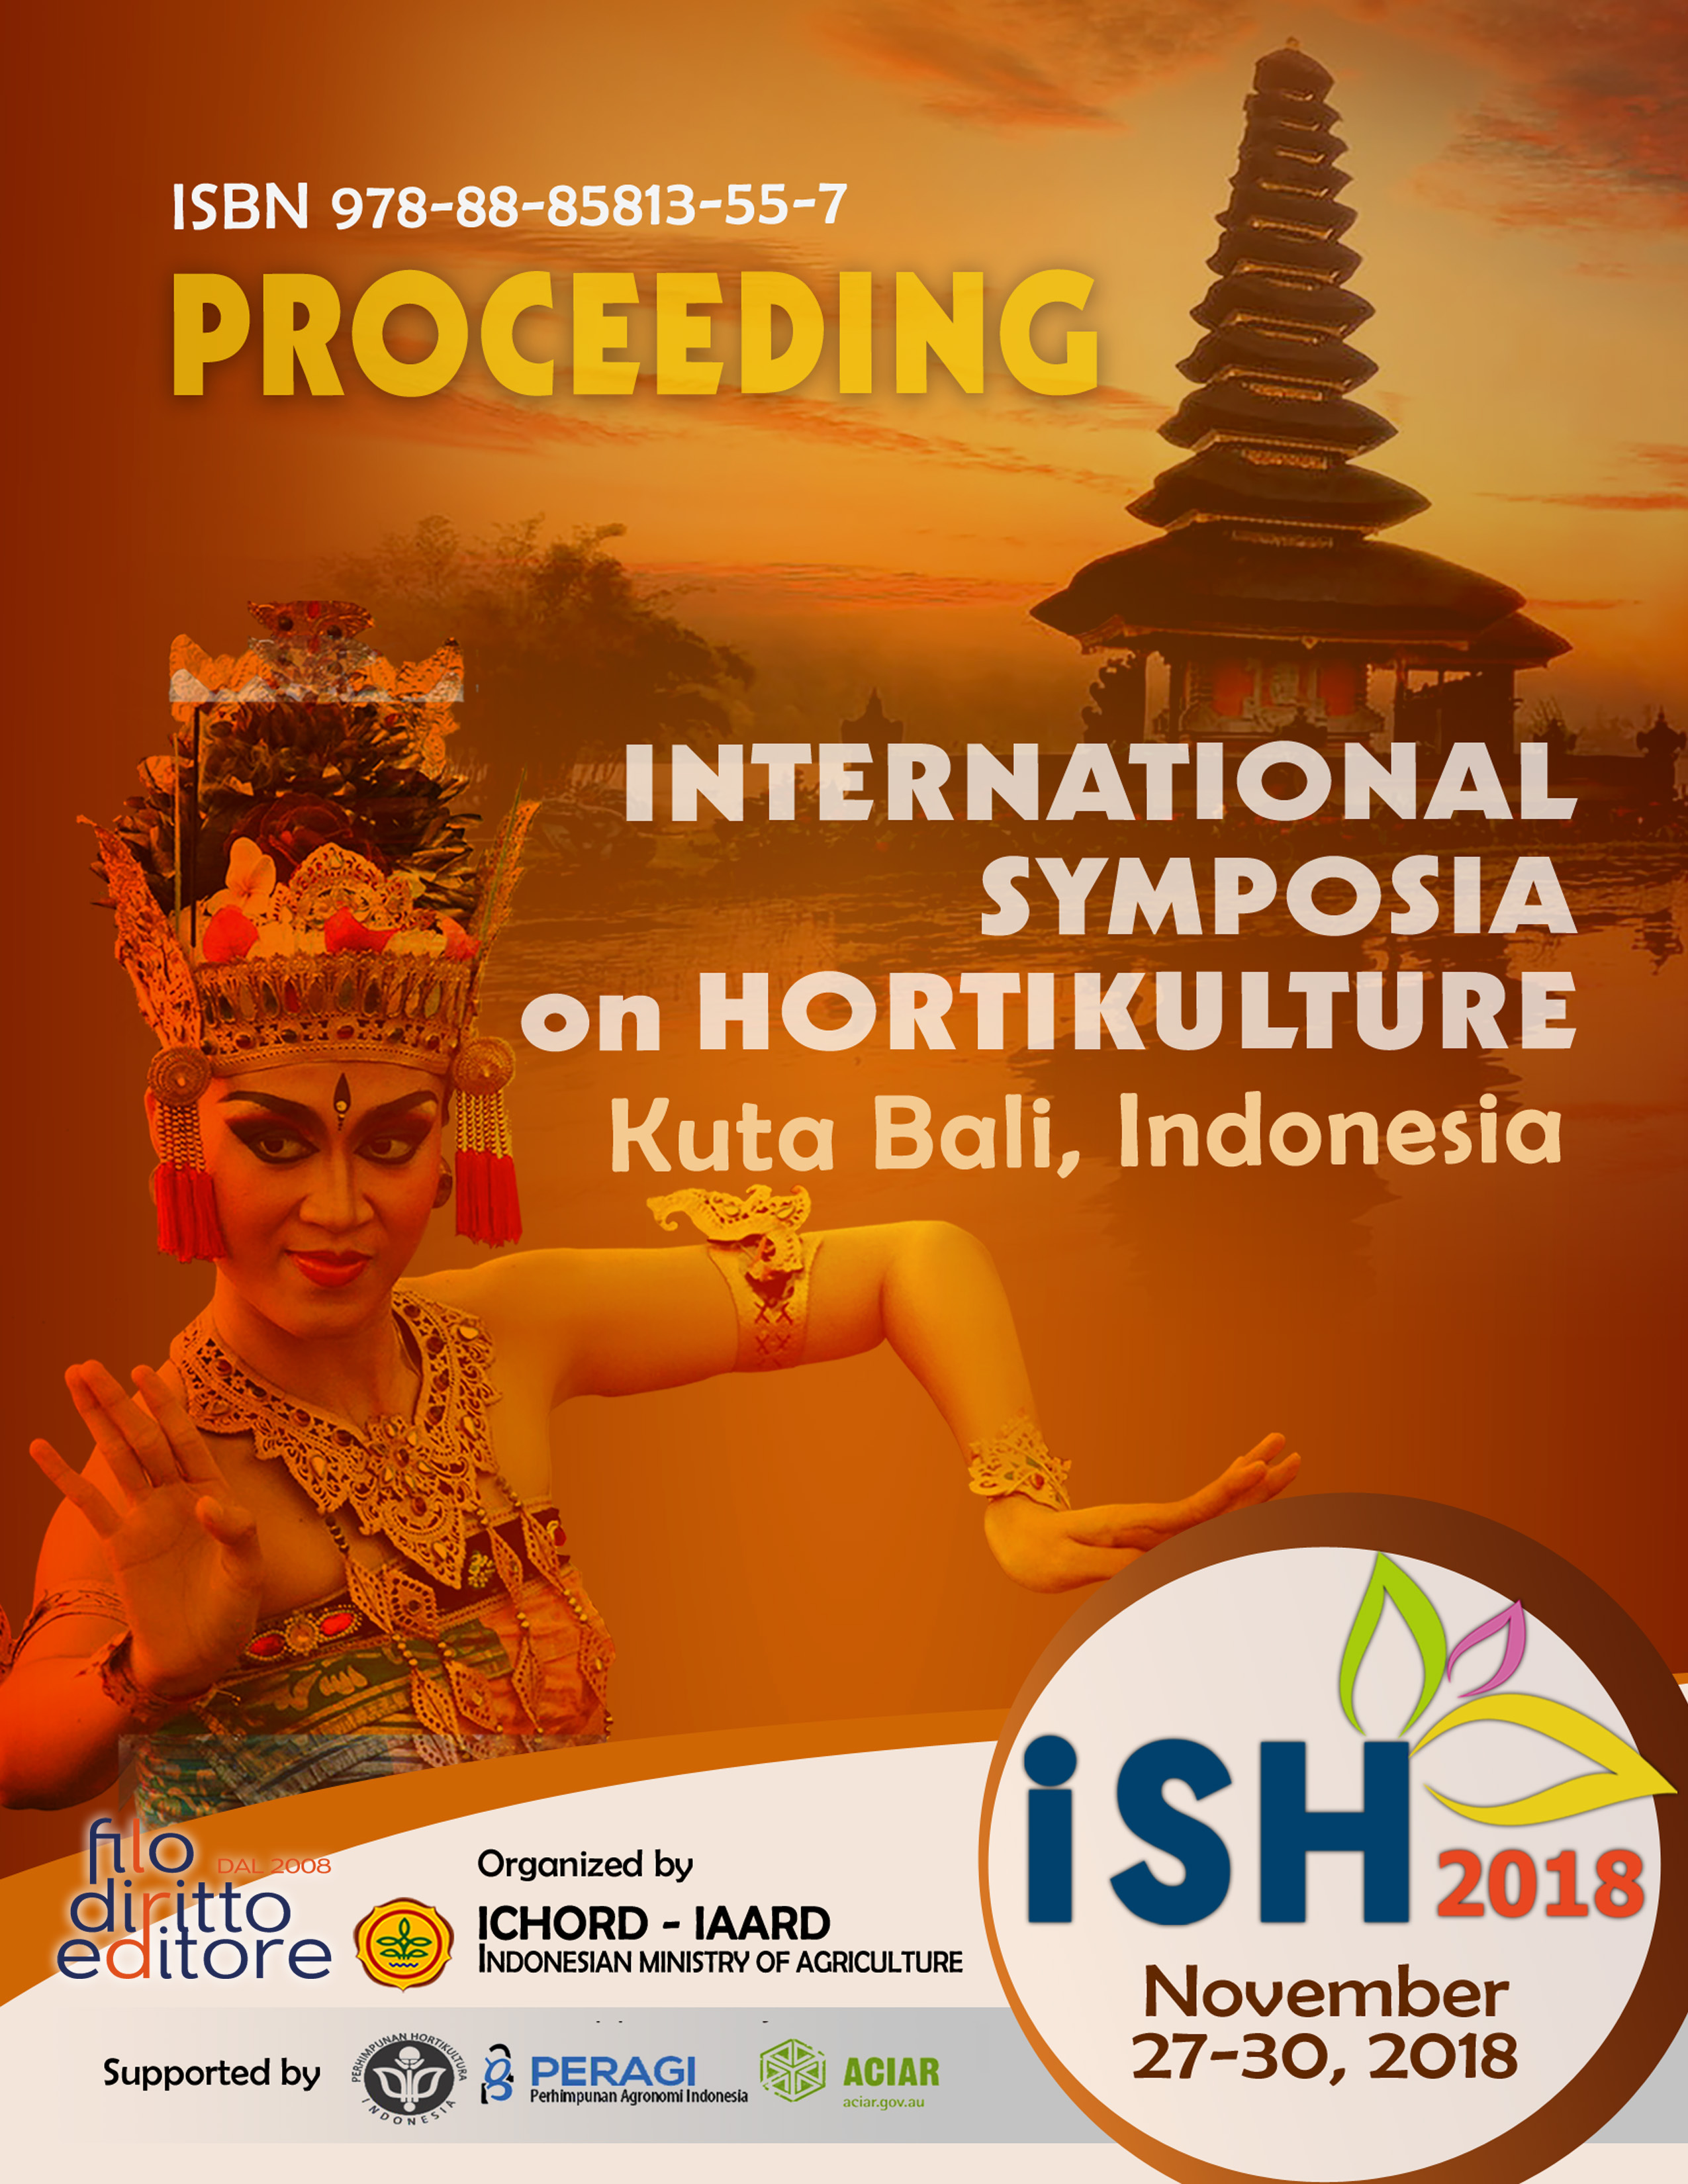 ISH 2018 - International Symposia on Horticulture  (27 - 30 November 2018, Kuta Bali, Indonesia)